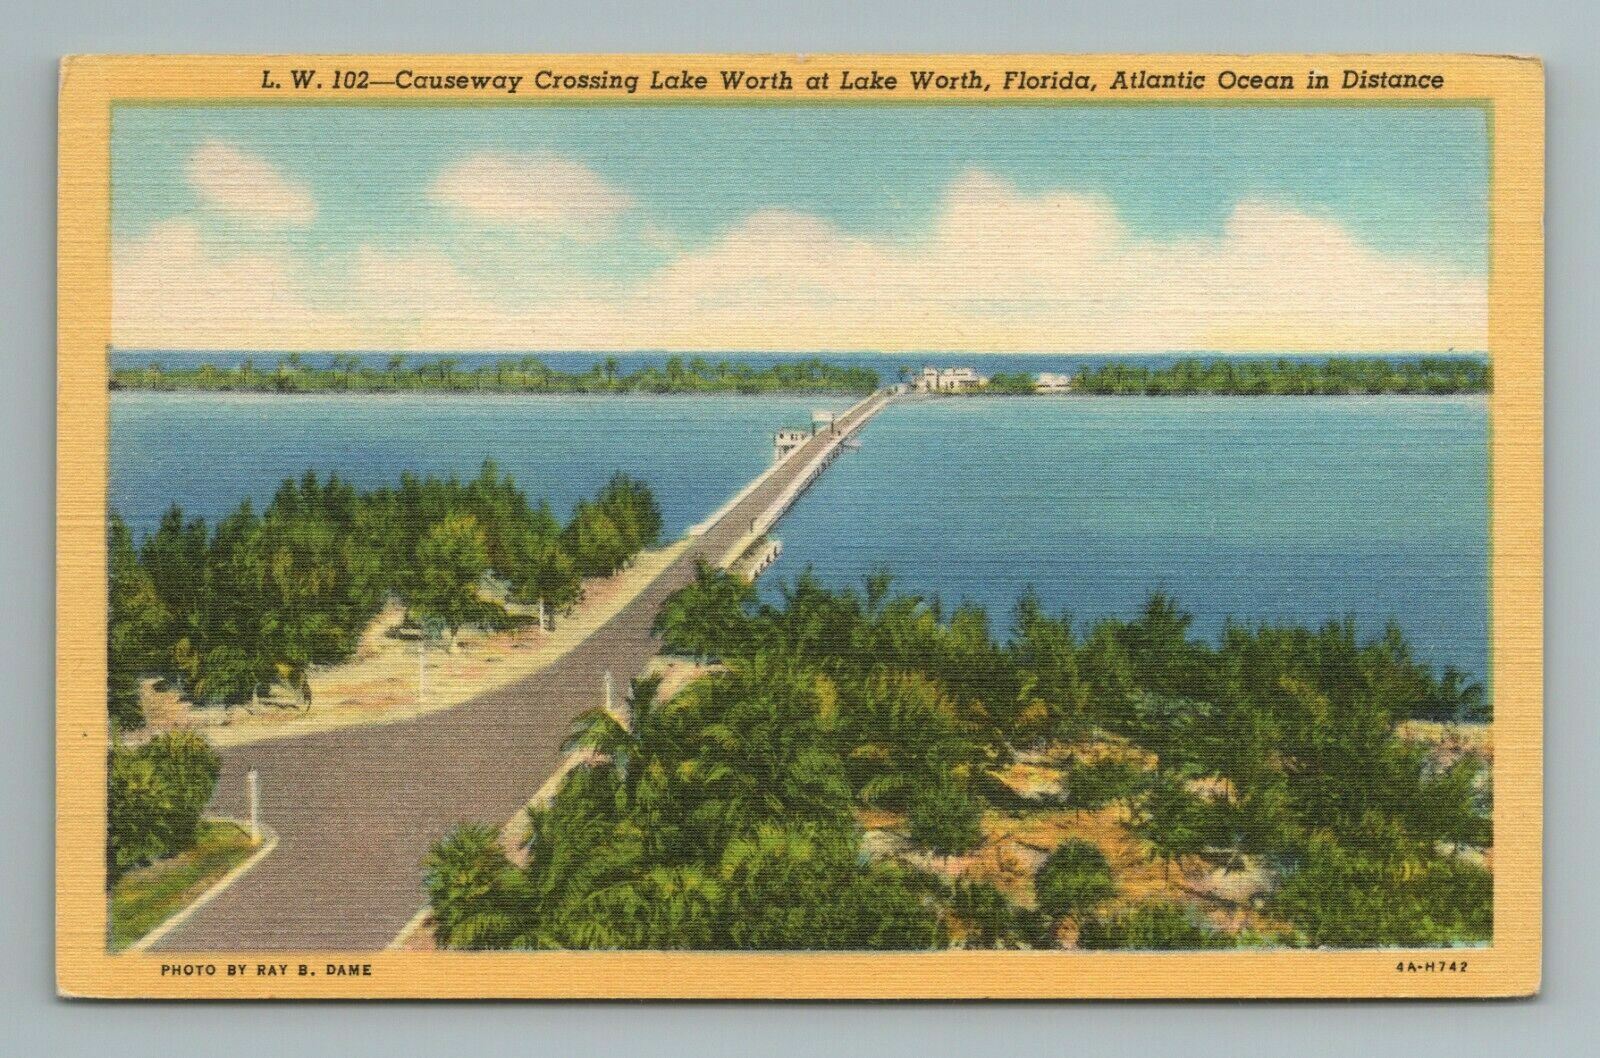 Causeway Crossing Lake Worth at Lake Worth, Florida Postcard